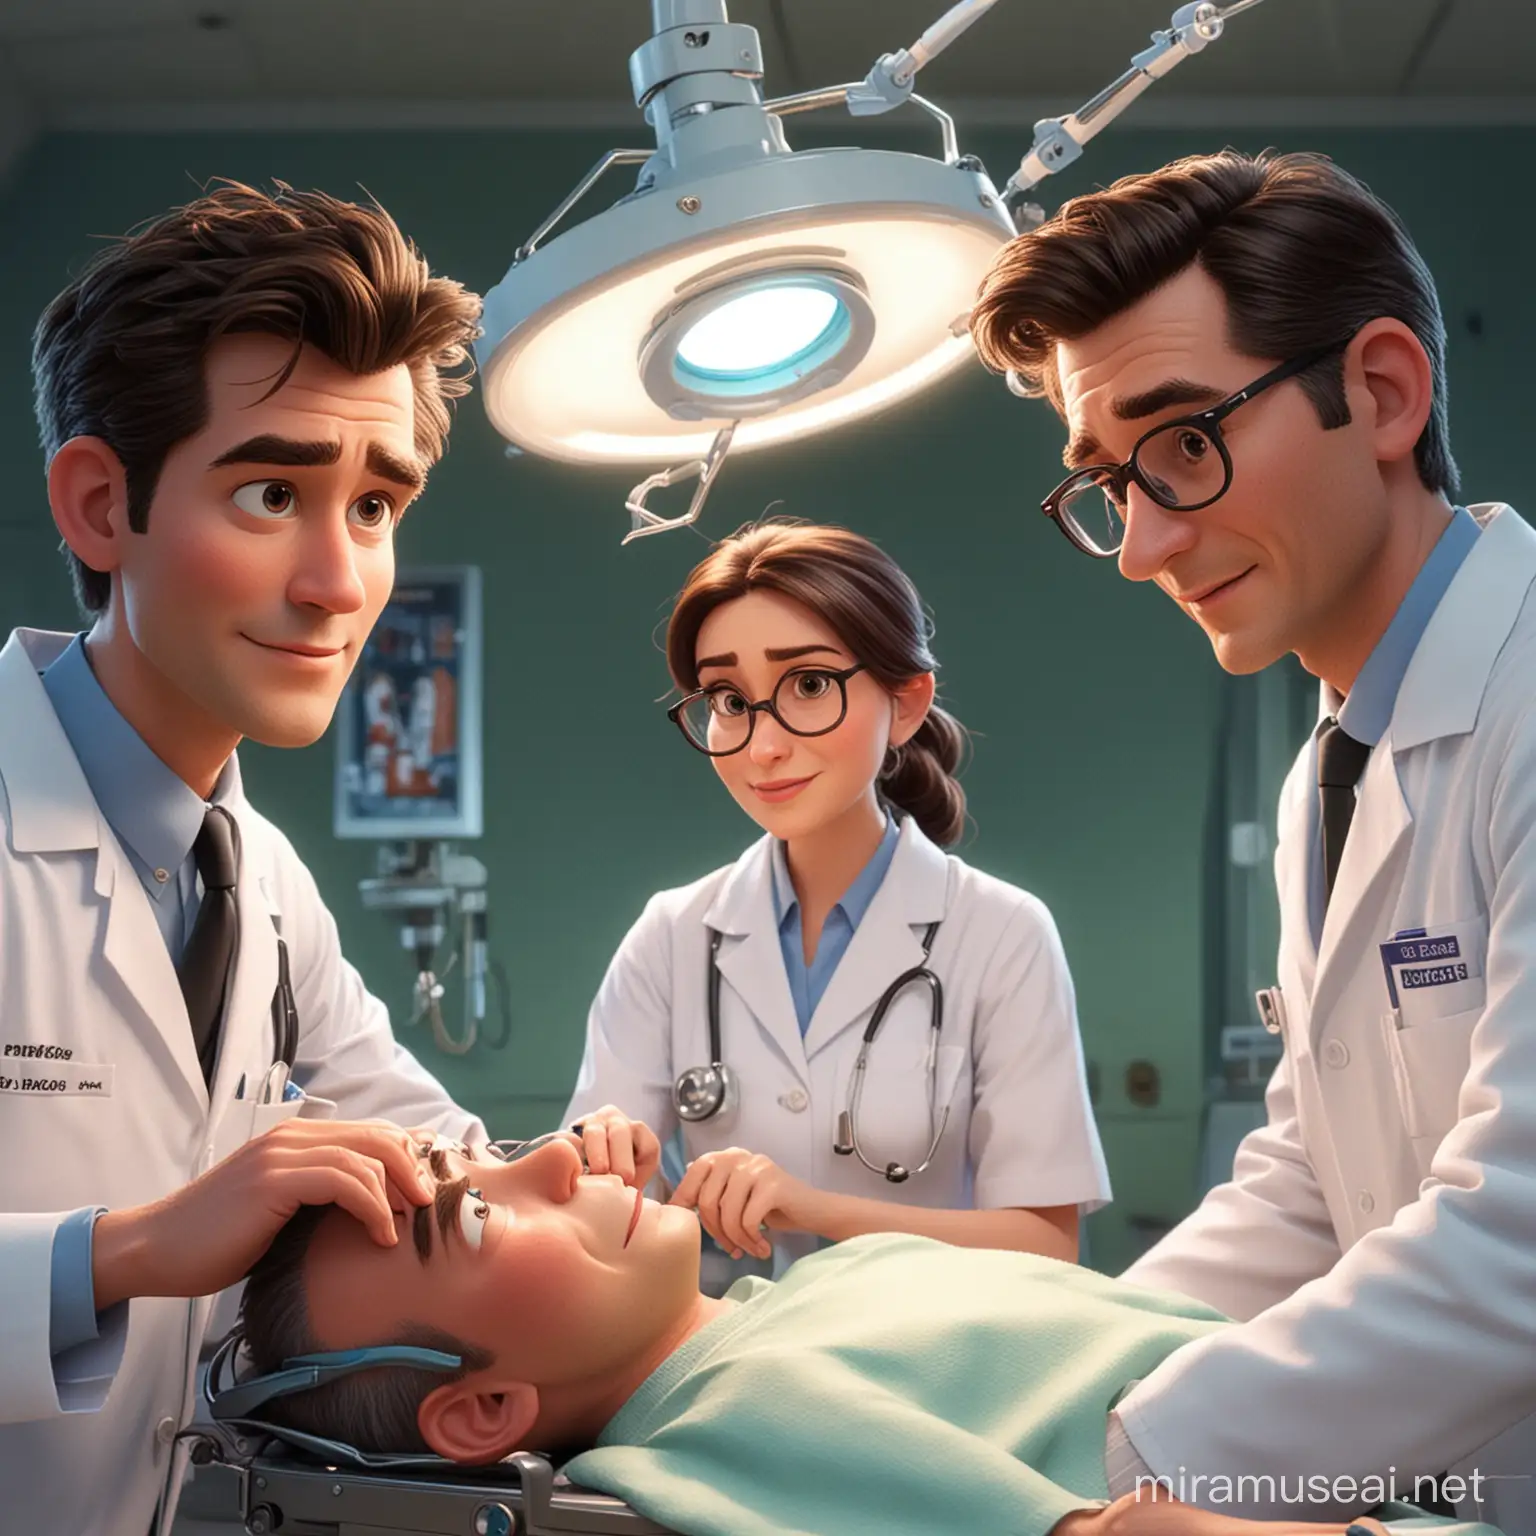 Doctors Performing Surgery in Disney Pixar Style